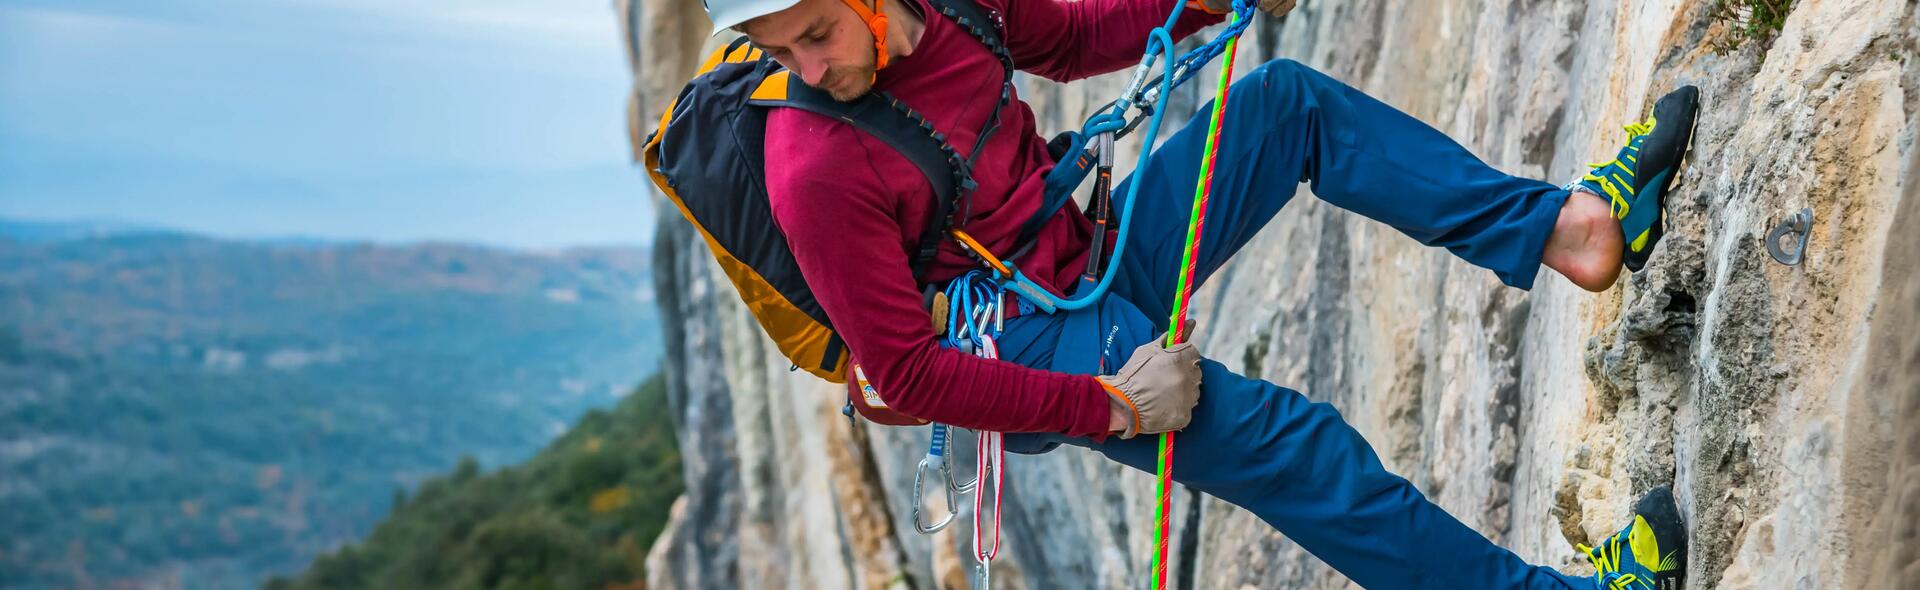 comment-choisir-un-harnais-baudrier-escalade-alpinisme